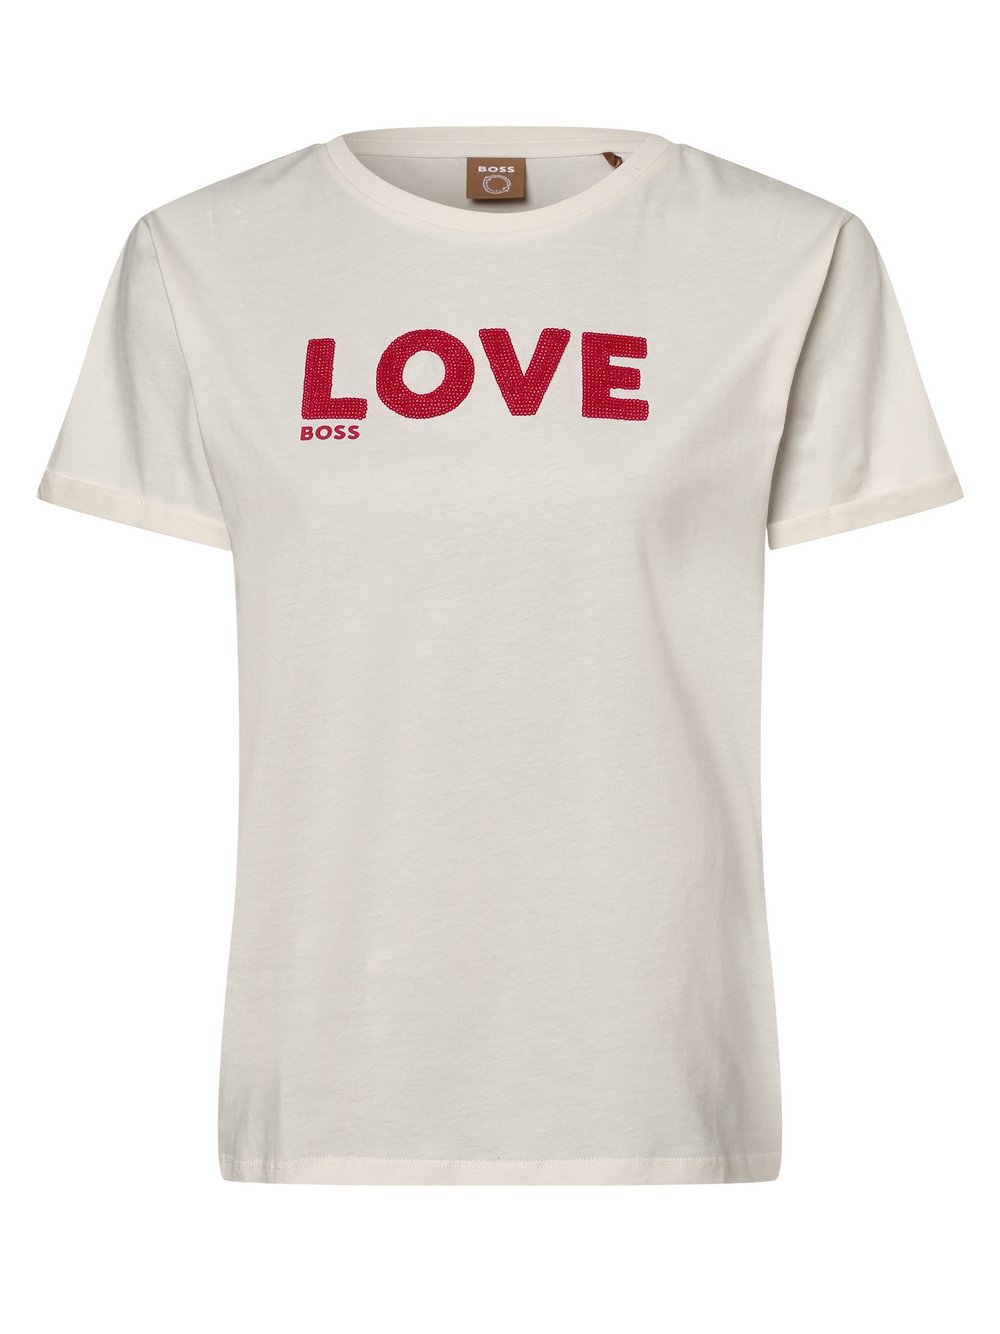 BOSS - T-shirt damski – C_Elinea_VD, biały